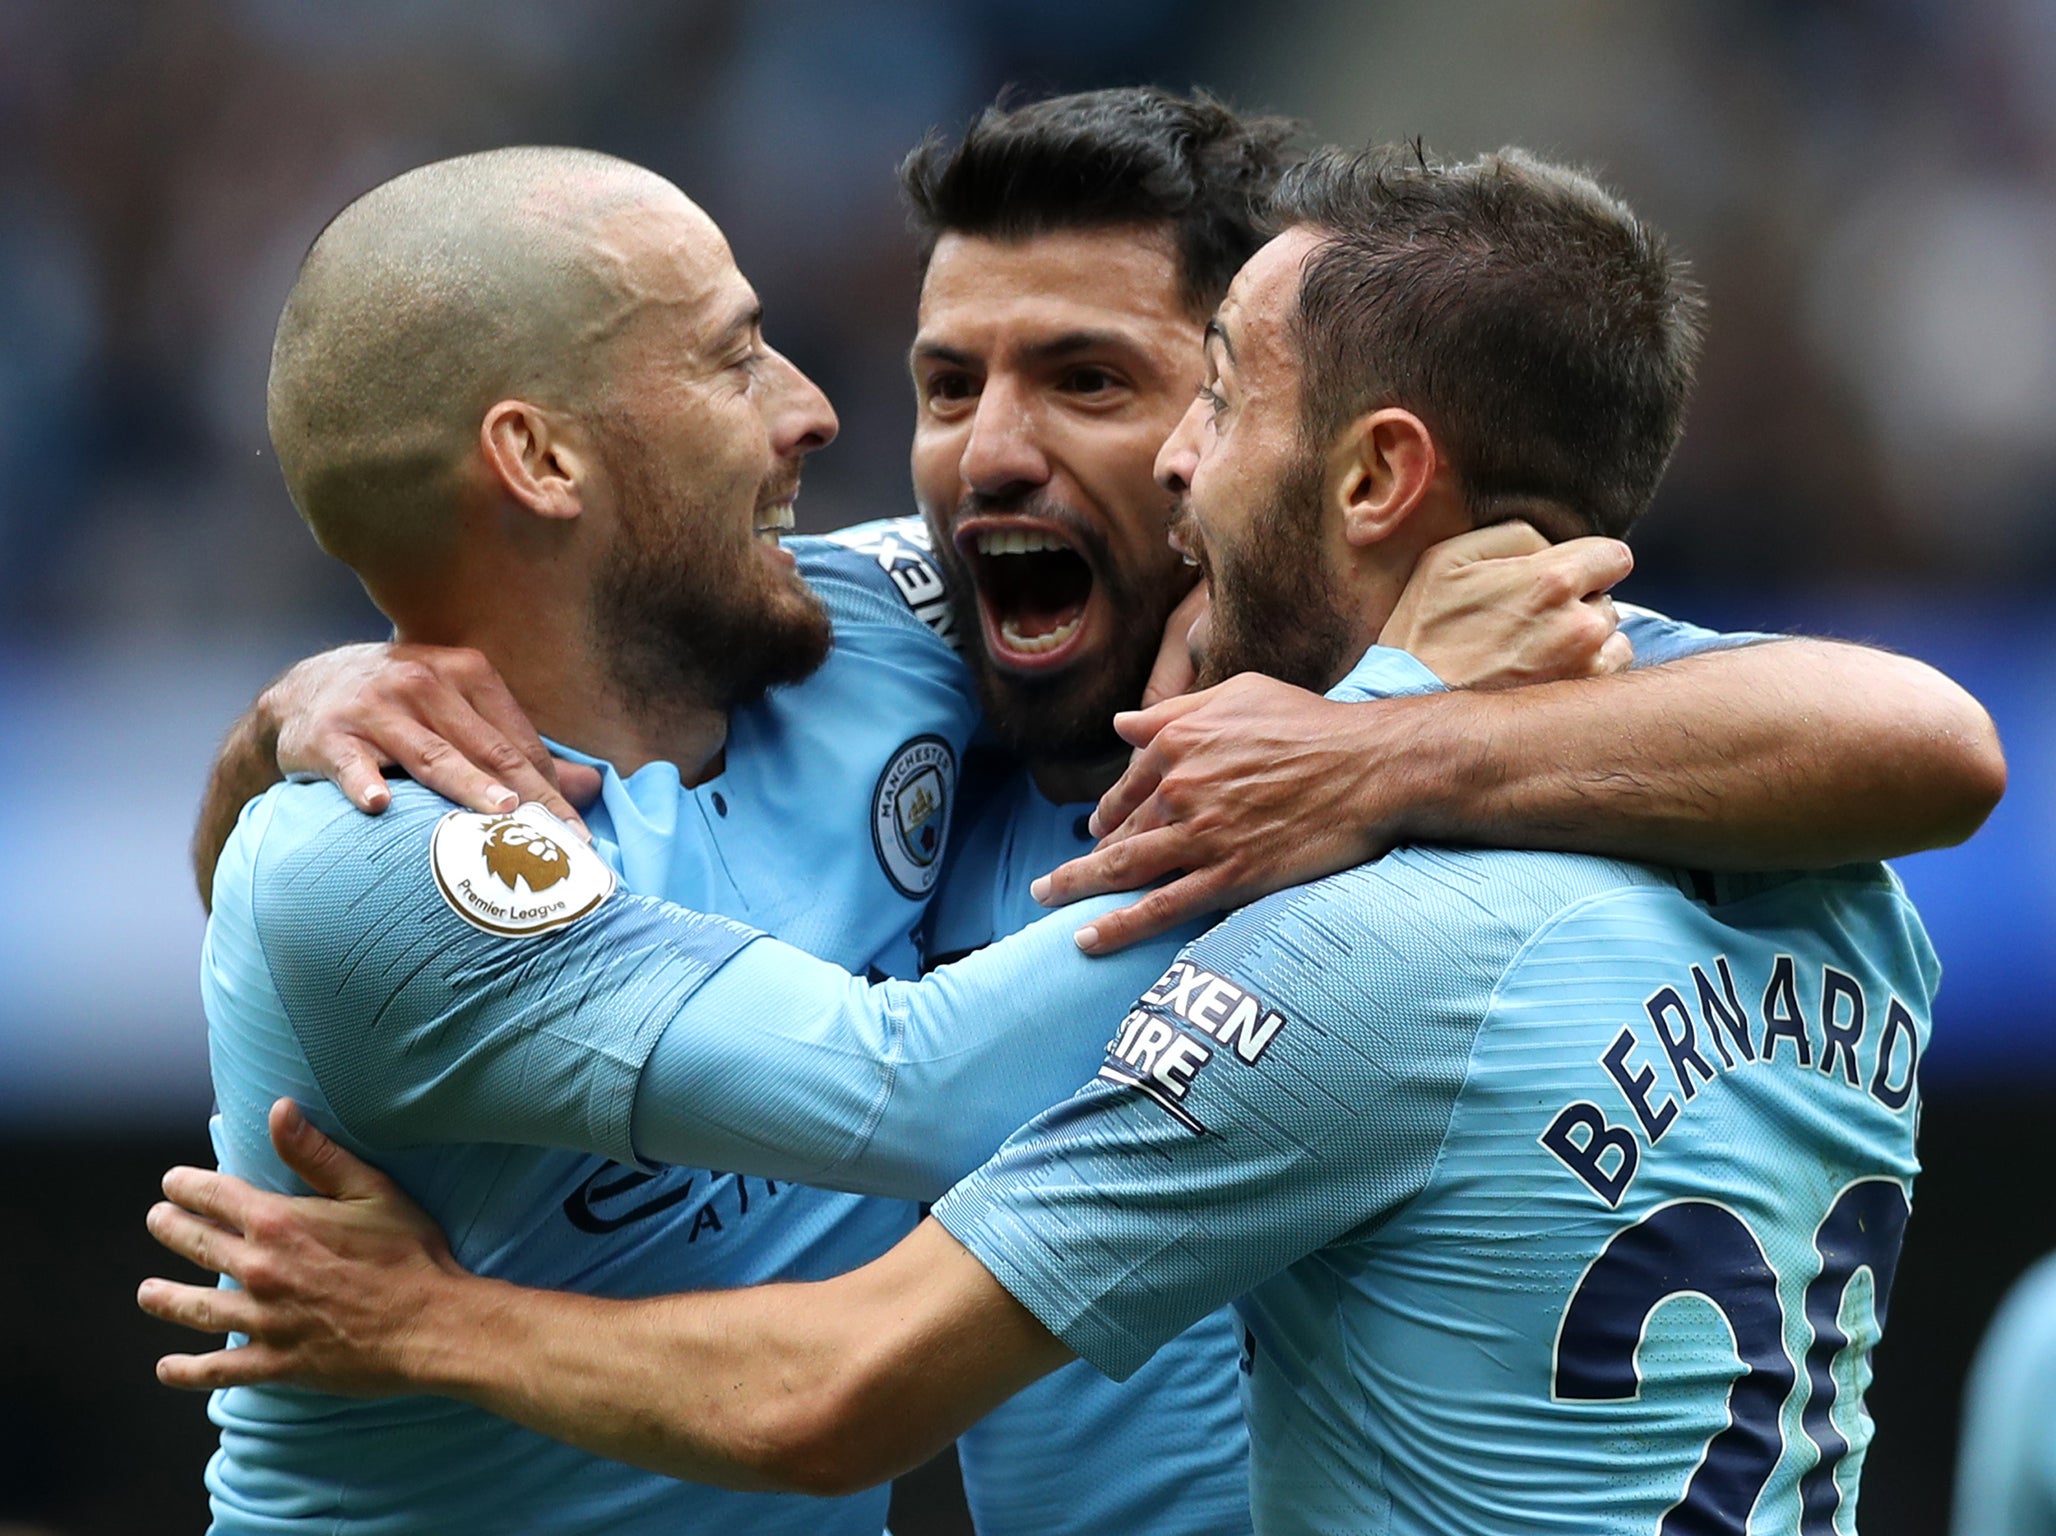 Sergio Aguero of Manchester City celebrates